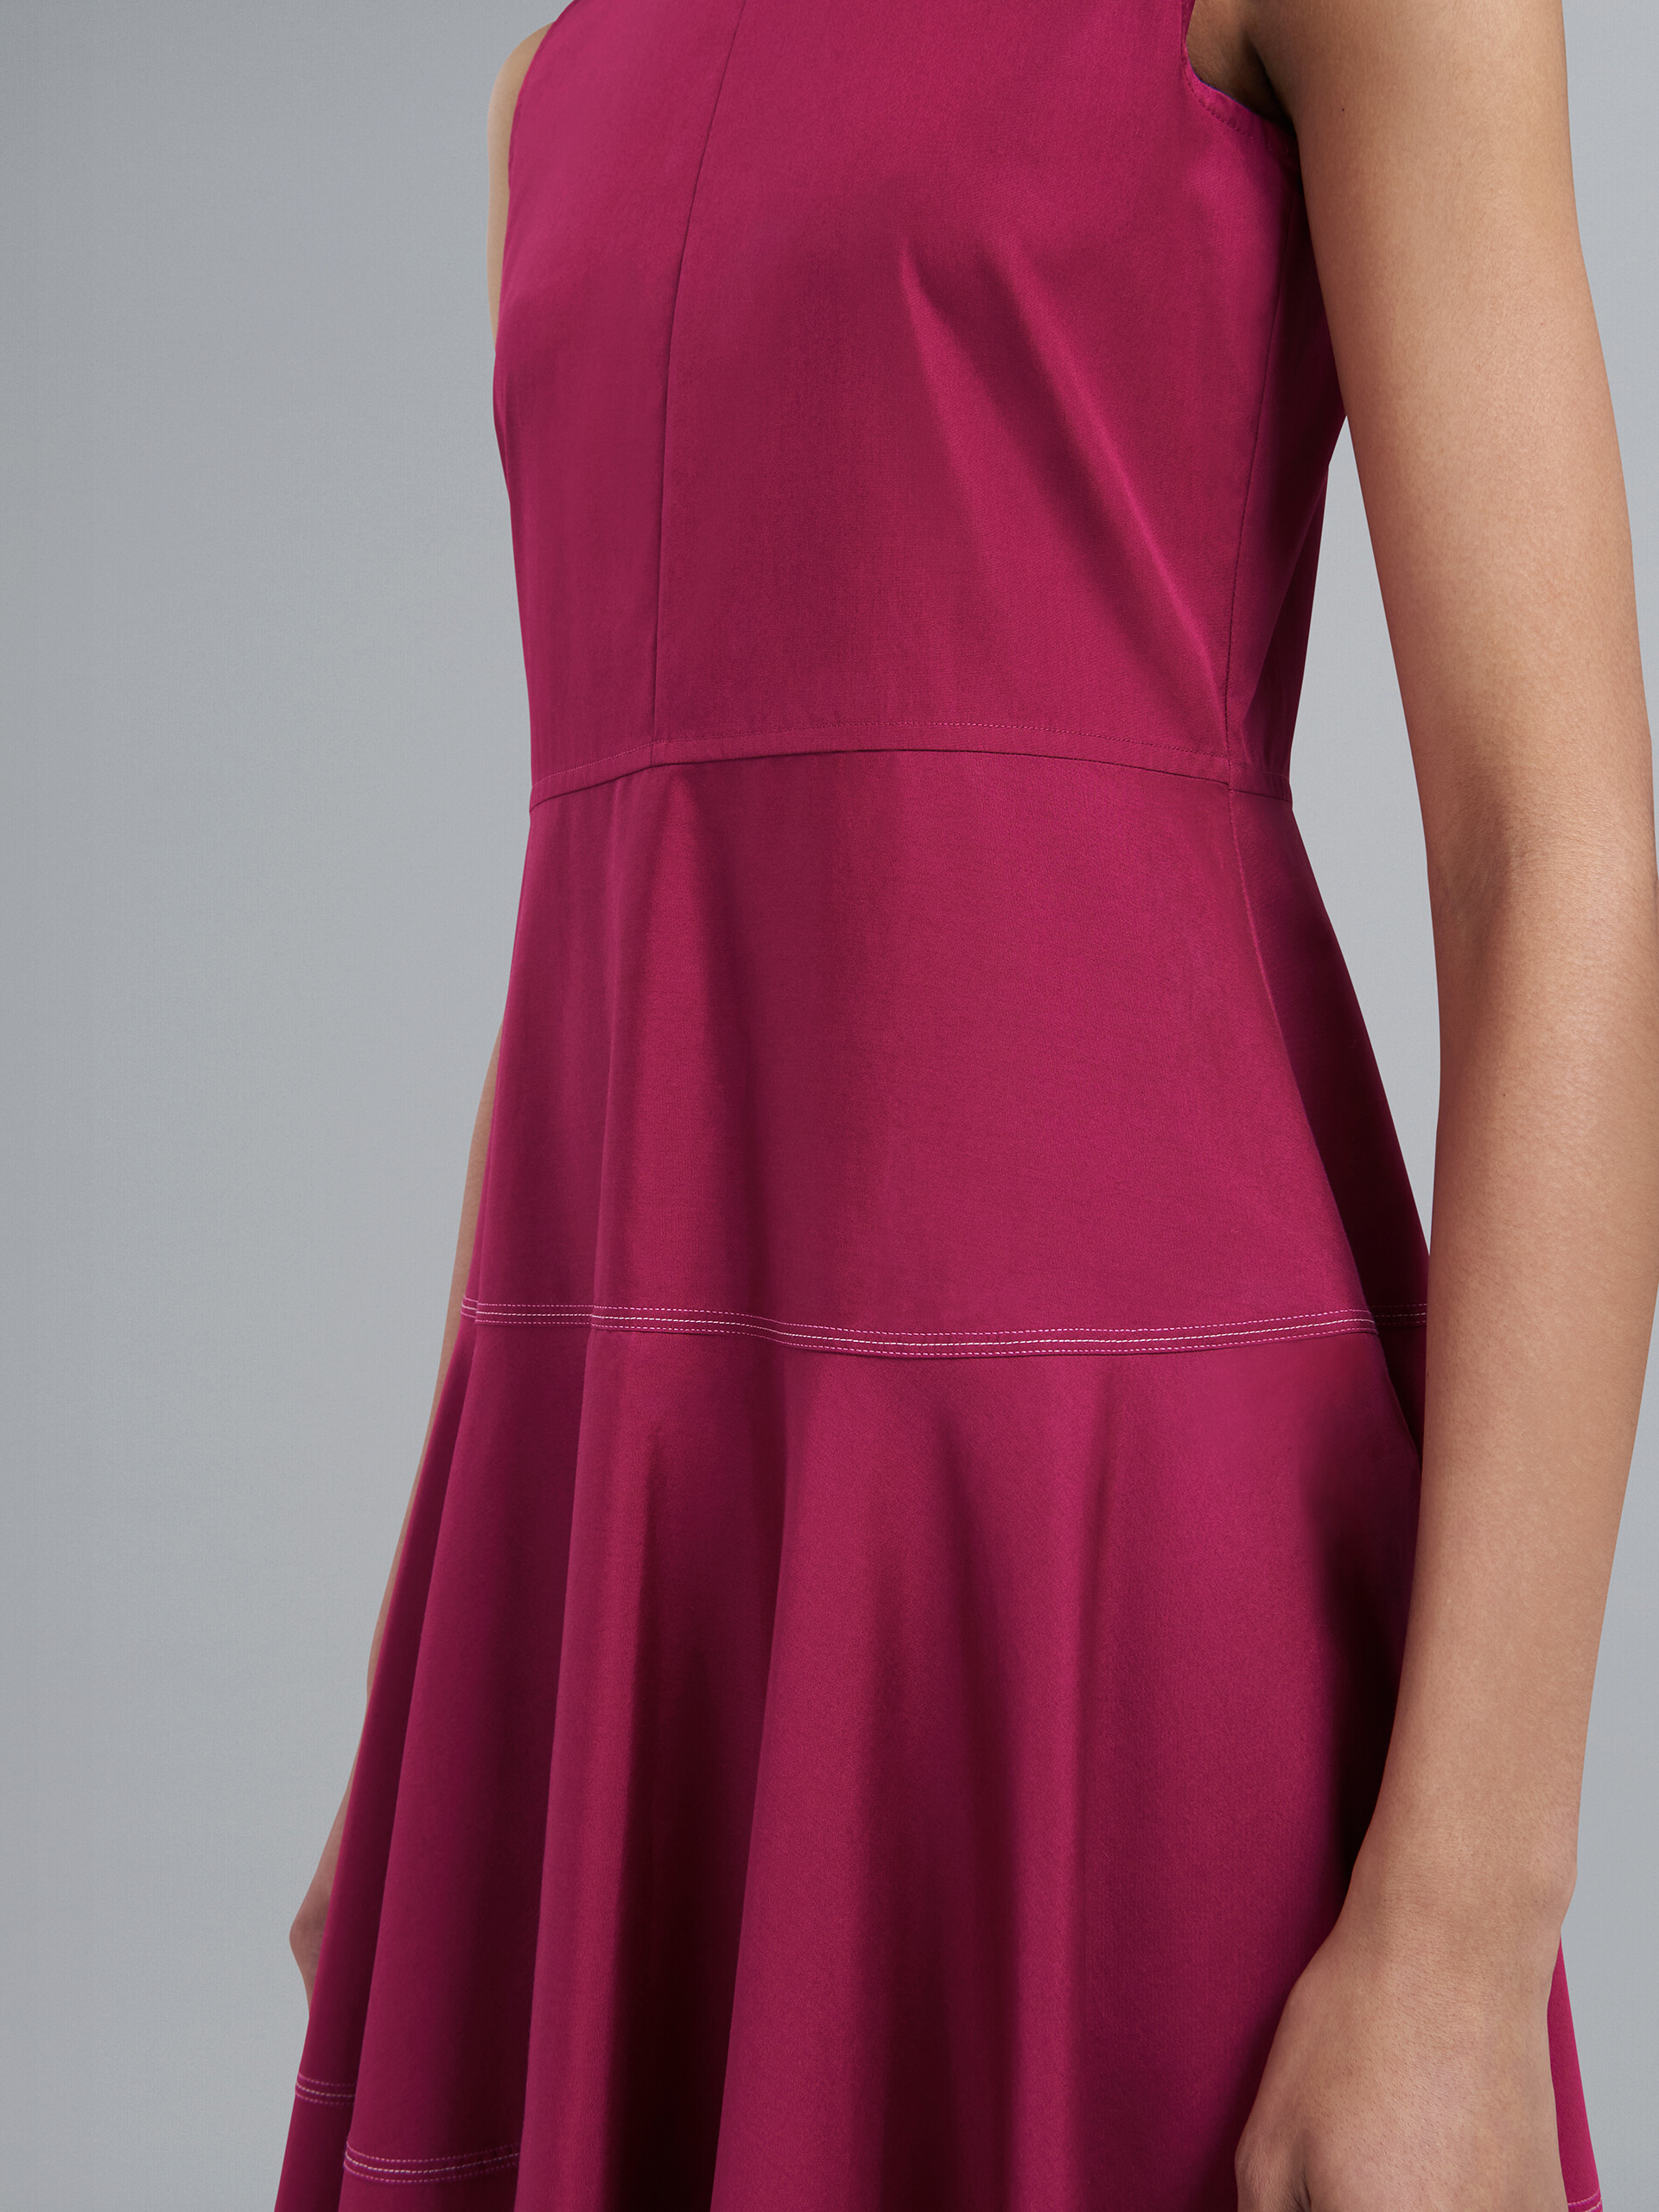 Cotton poplin dress - Dresses - Image 5